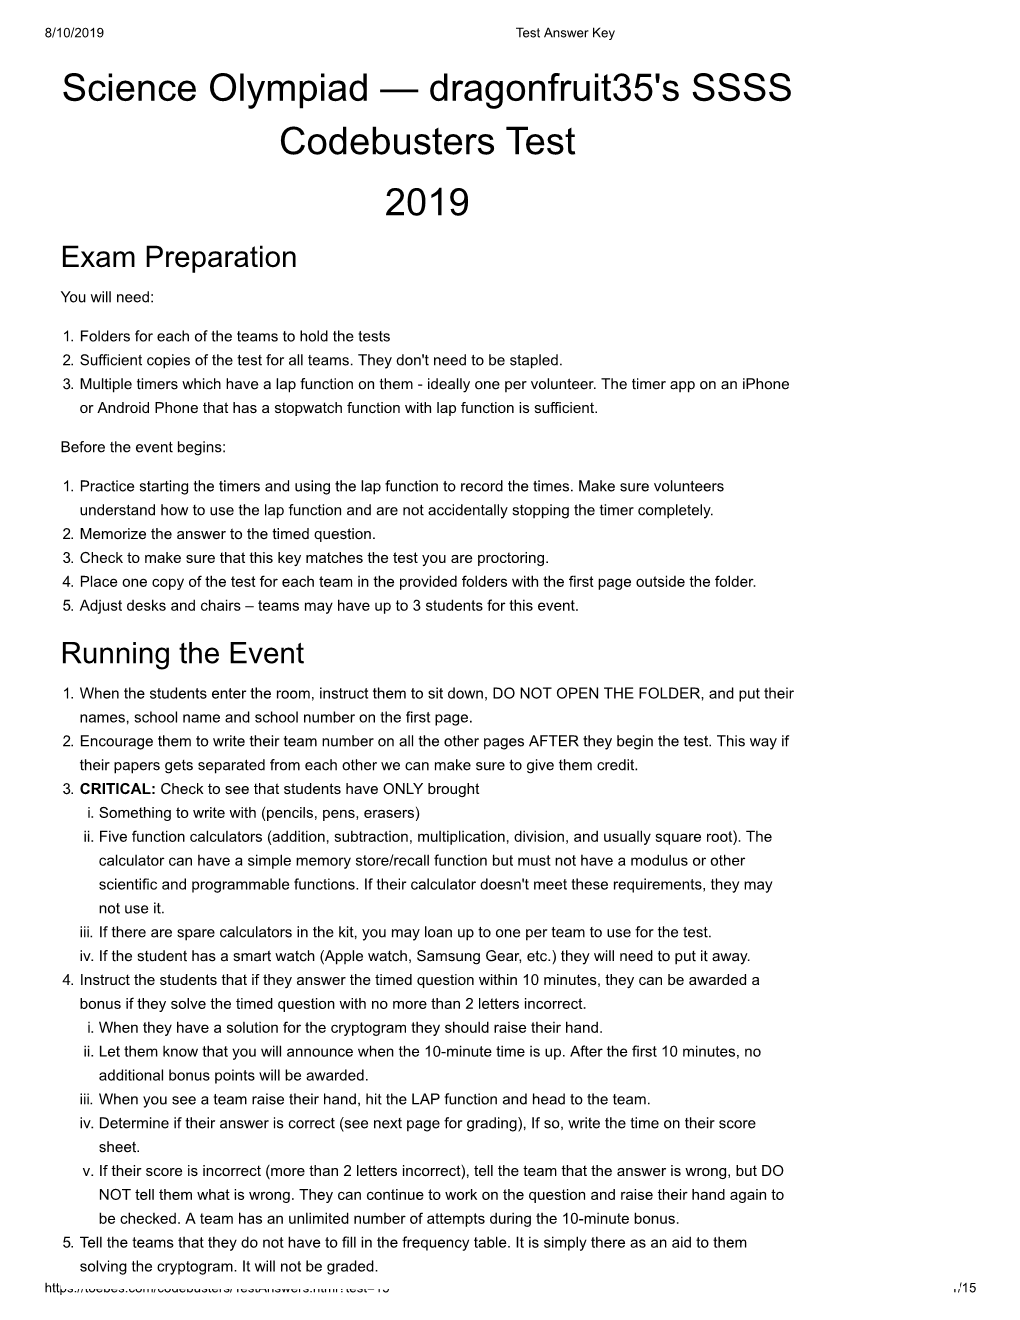 Dragonfruit35's SSSS Codebusters Test 2019 Exam Preparation